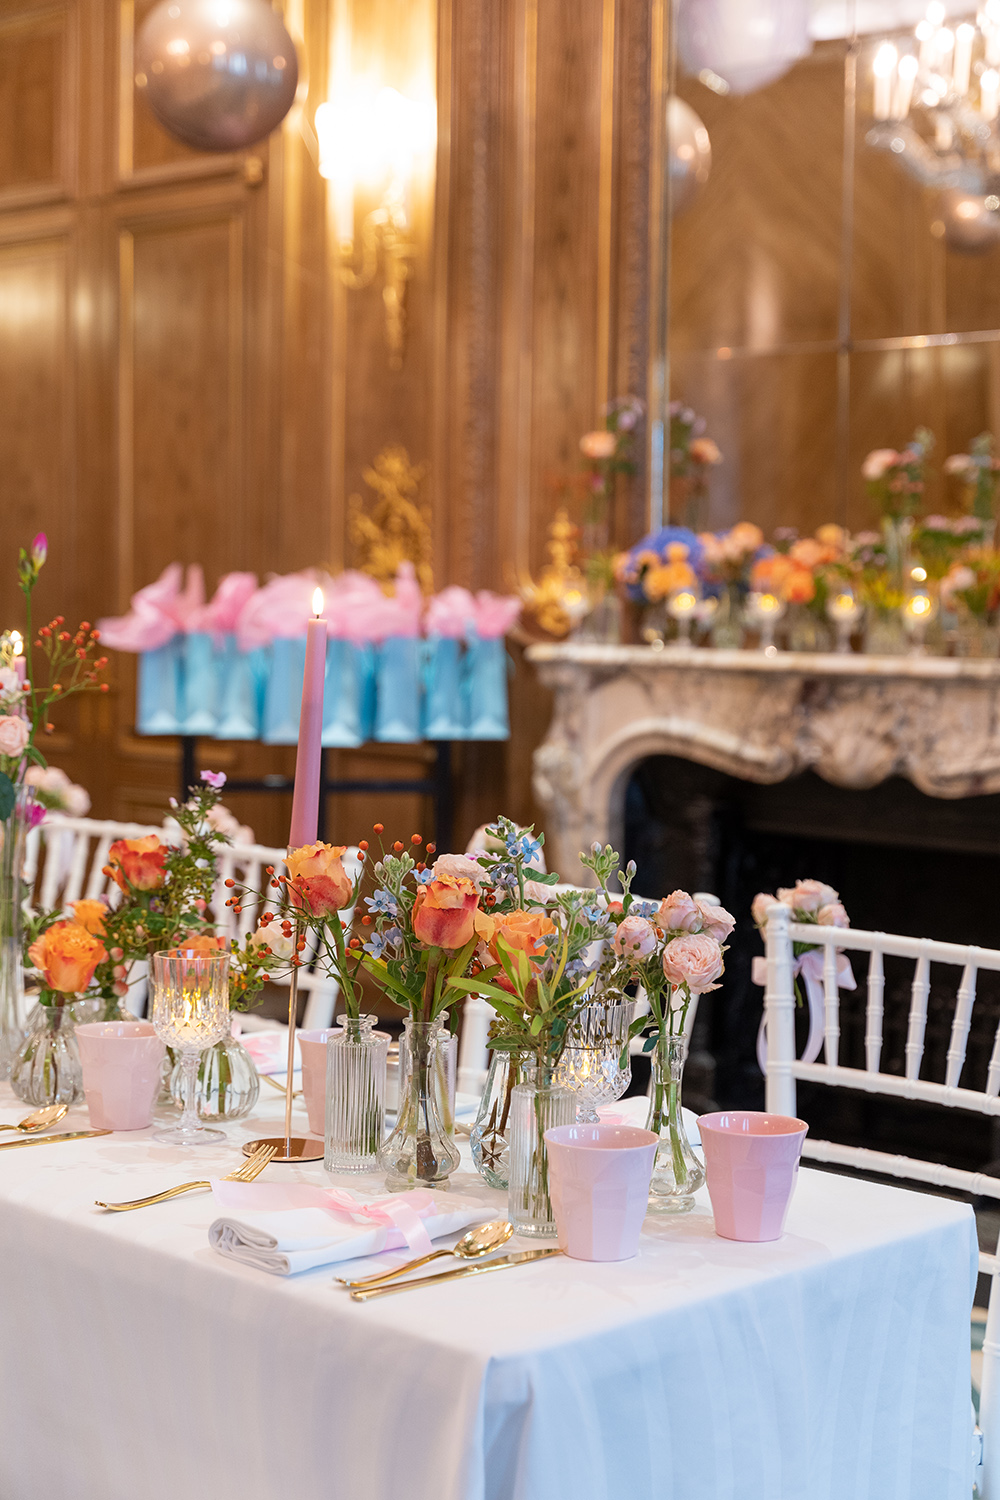 An elaborate table of flowers created by Moyses Stevens events team